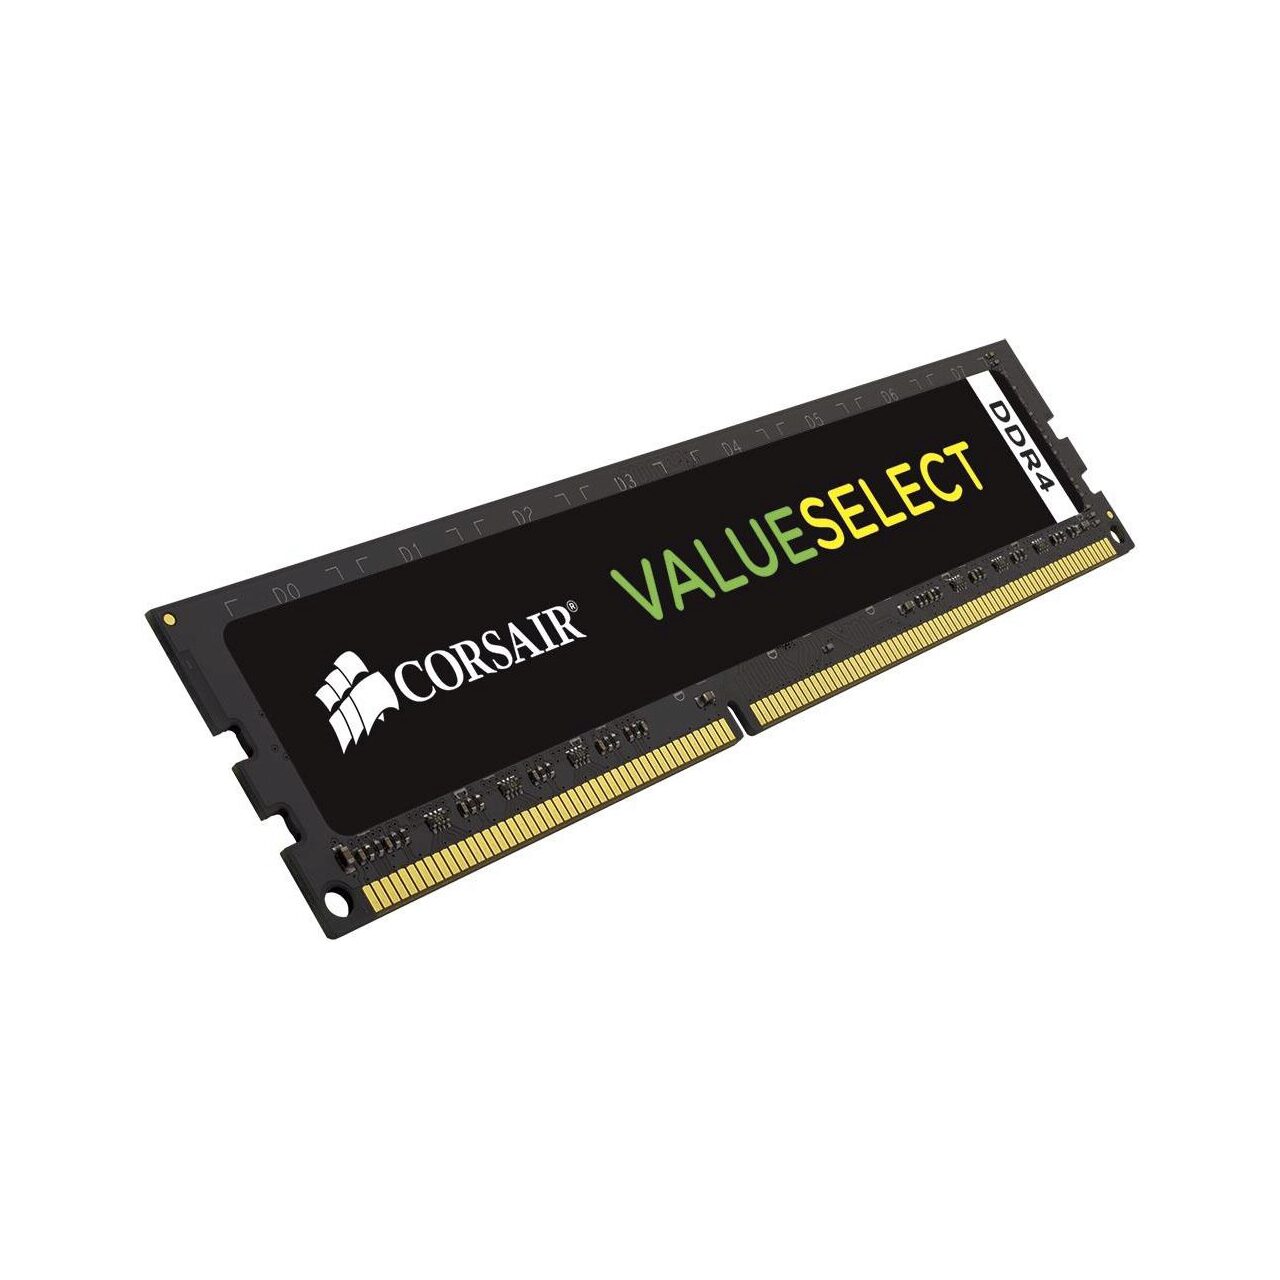 Memorie RAM Corsair ValueSelect, CMV8GX4M1A2133C15, 8GB DIMM, DDR4, 2133 MHz, CL 15, 1.2V, Negru